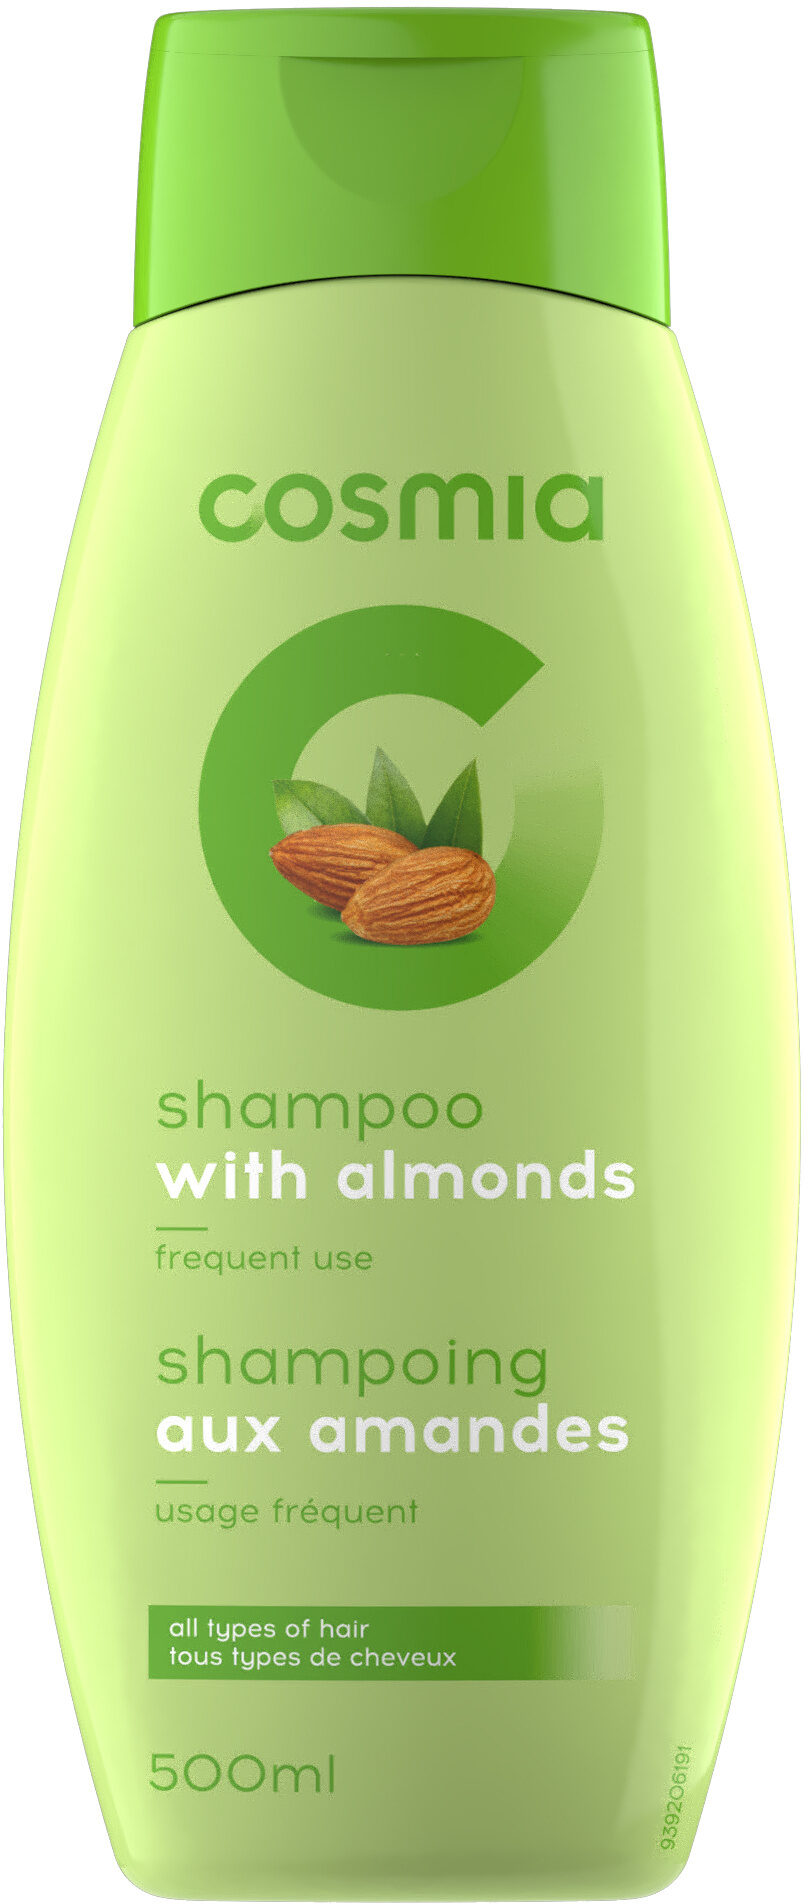 Shampoing aux amandes - Produkt - fr